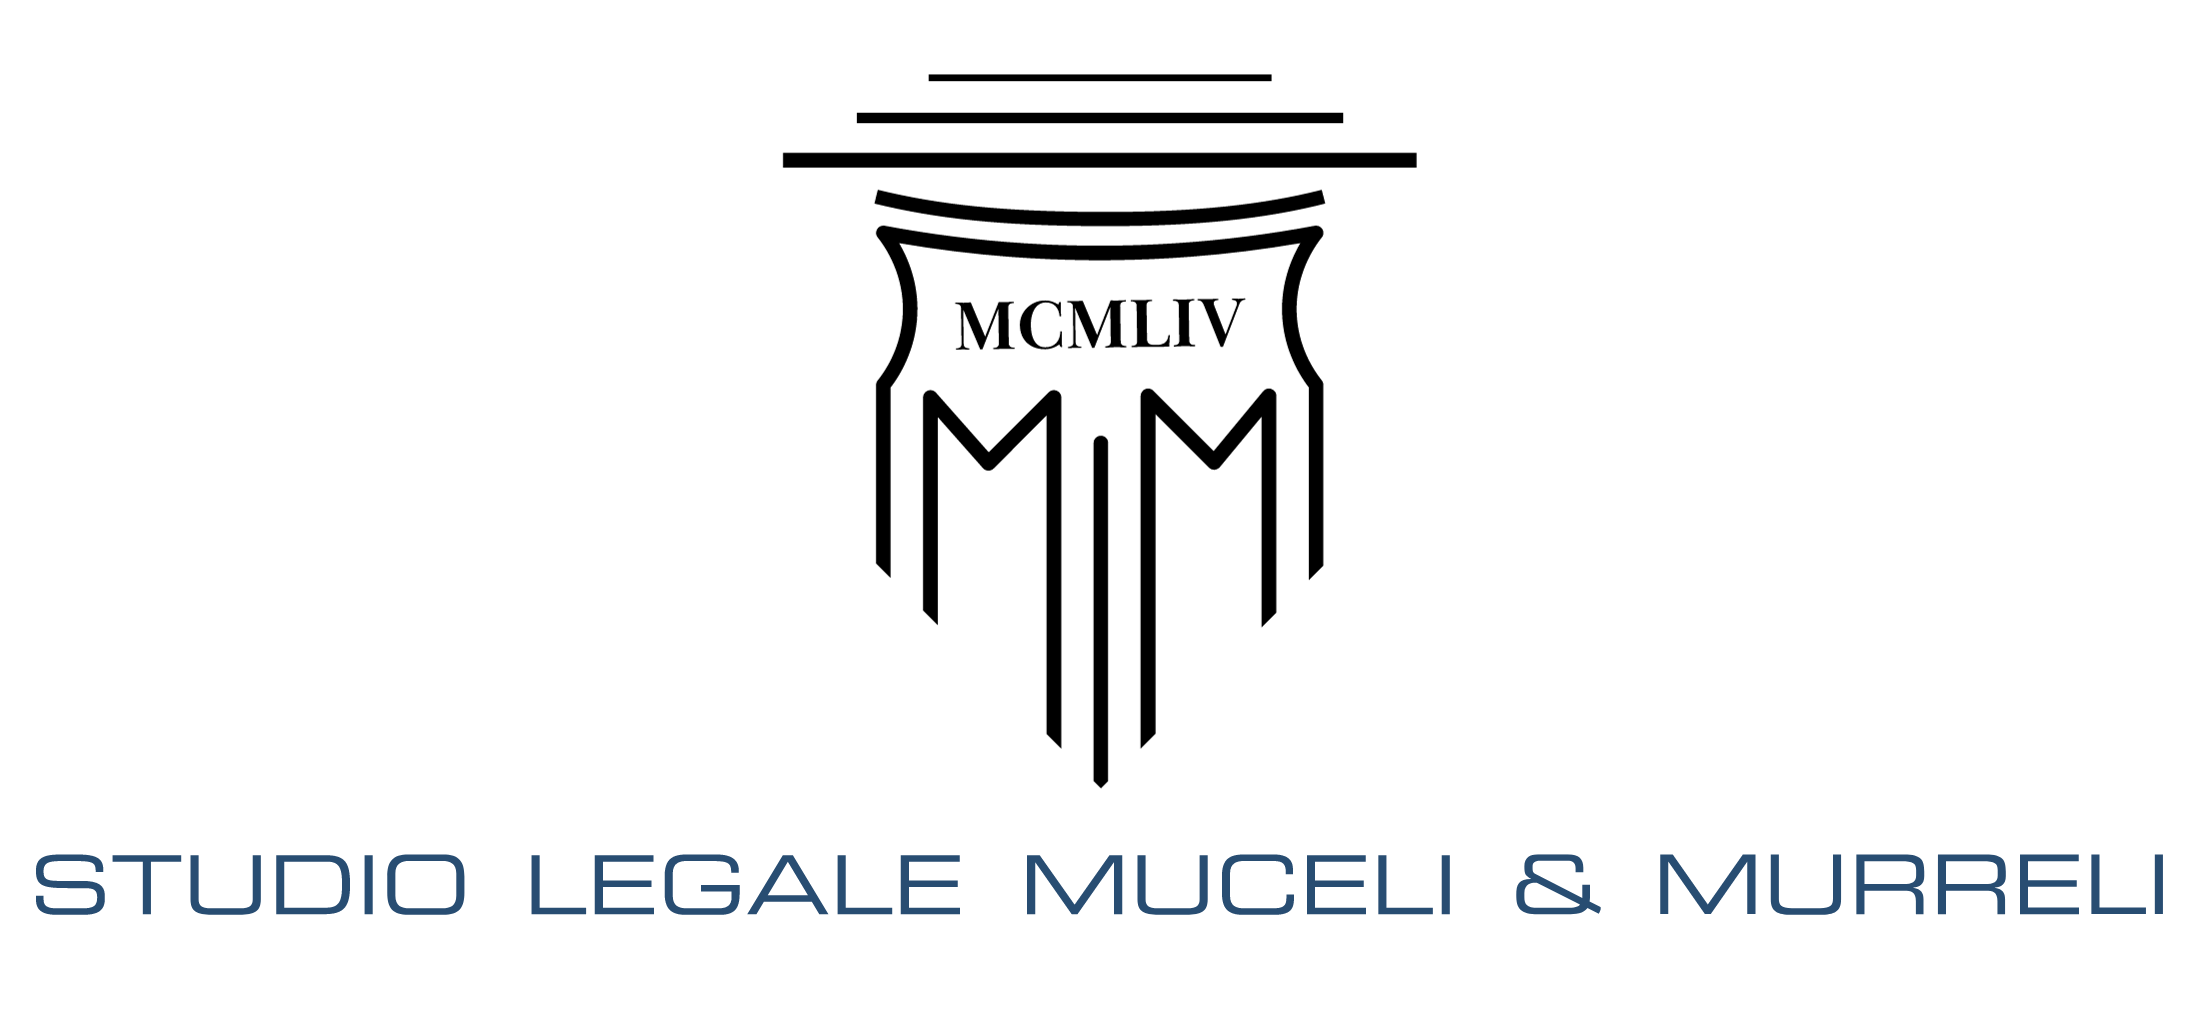 Studio legale Muceli & Murreli